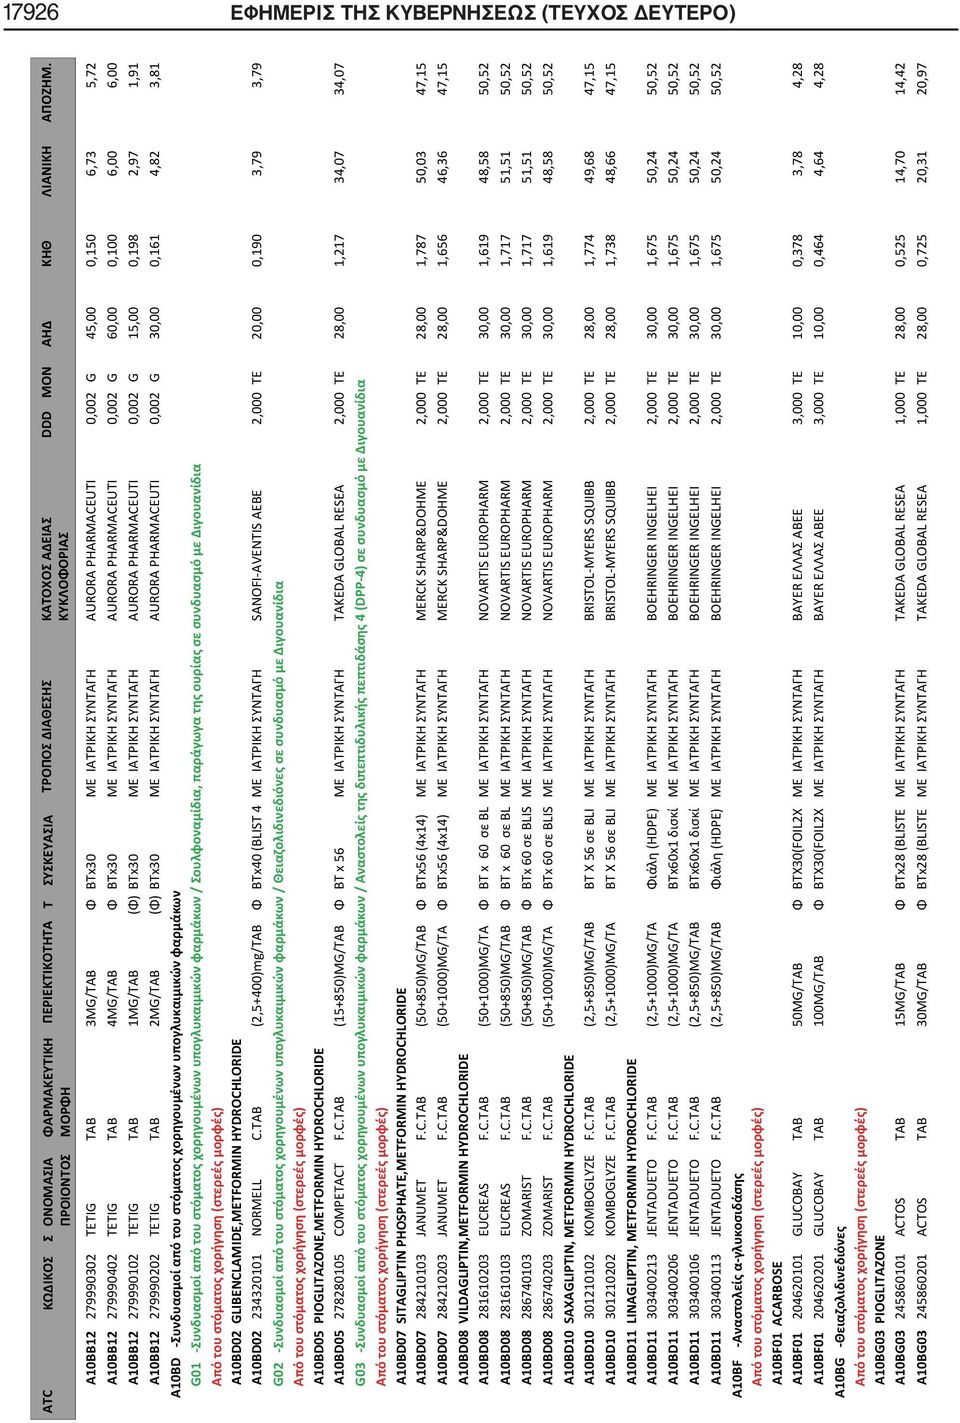 279990202 TETIG TAB 2MG/TAB (Φ) BTx30 ΜΕ ΙΑΤΡΙΚΗ ΣΥΝΤΑΓΗ AURORA PHARMACEUTI 0,002 G 30,00 0,161 4,82 3,81 A10BD -Συνδυασμοί από του στόματος χορηγουμένων υπογλυκαιμικών φαρμάκων G01 -Συνδυασμοί από